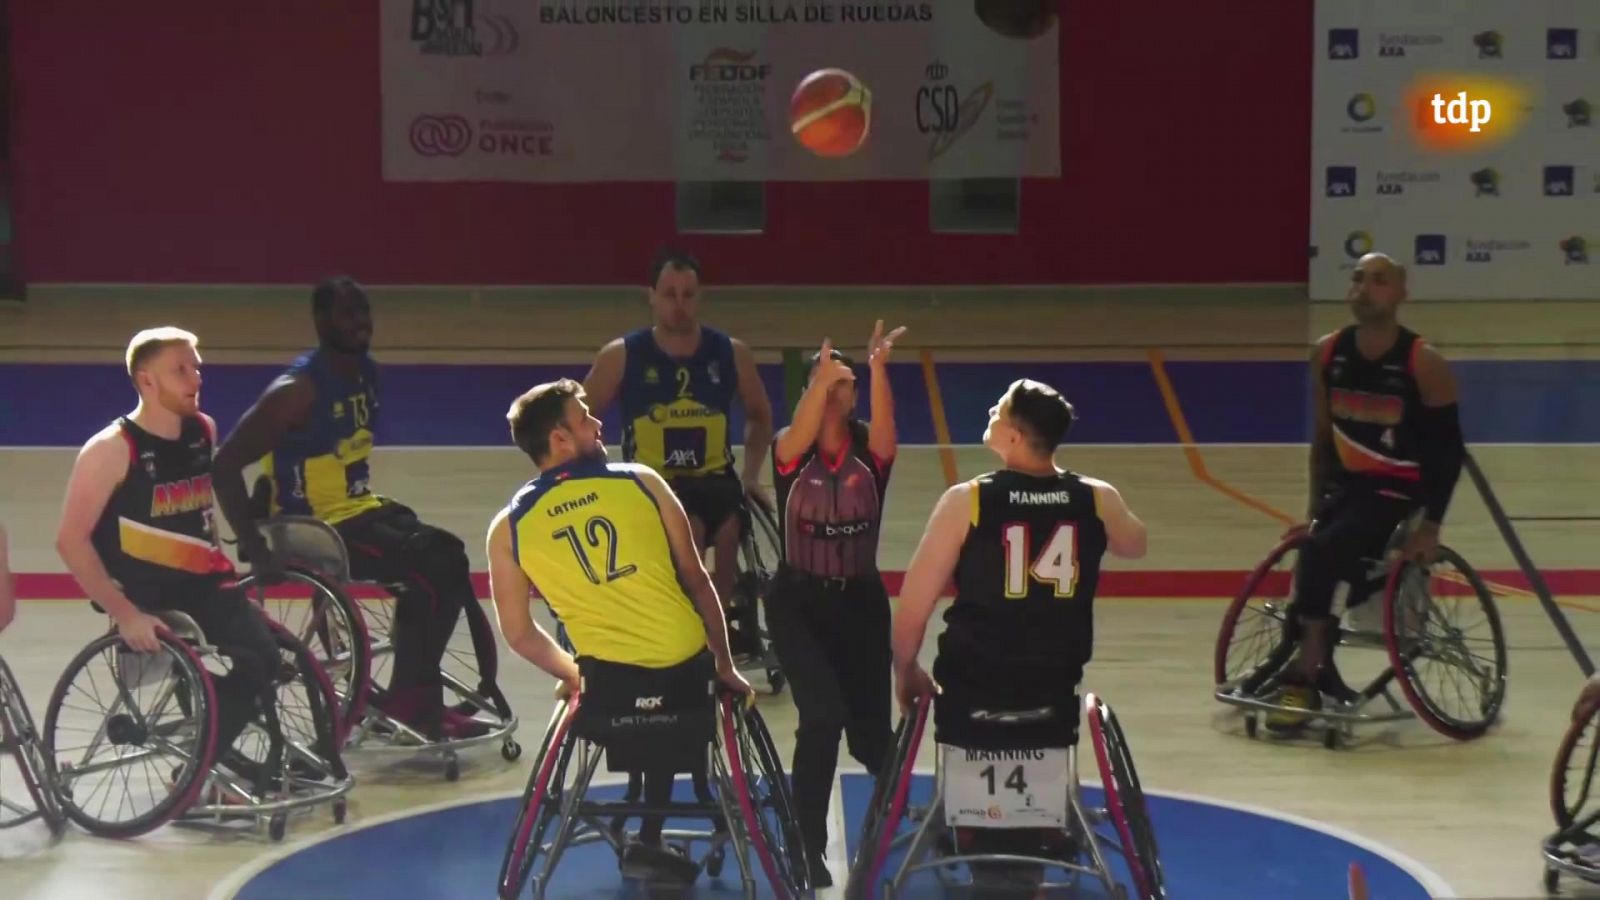 Baloncesto en silla de ruedas - Liga BSR División honor. Resumen jornada 19